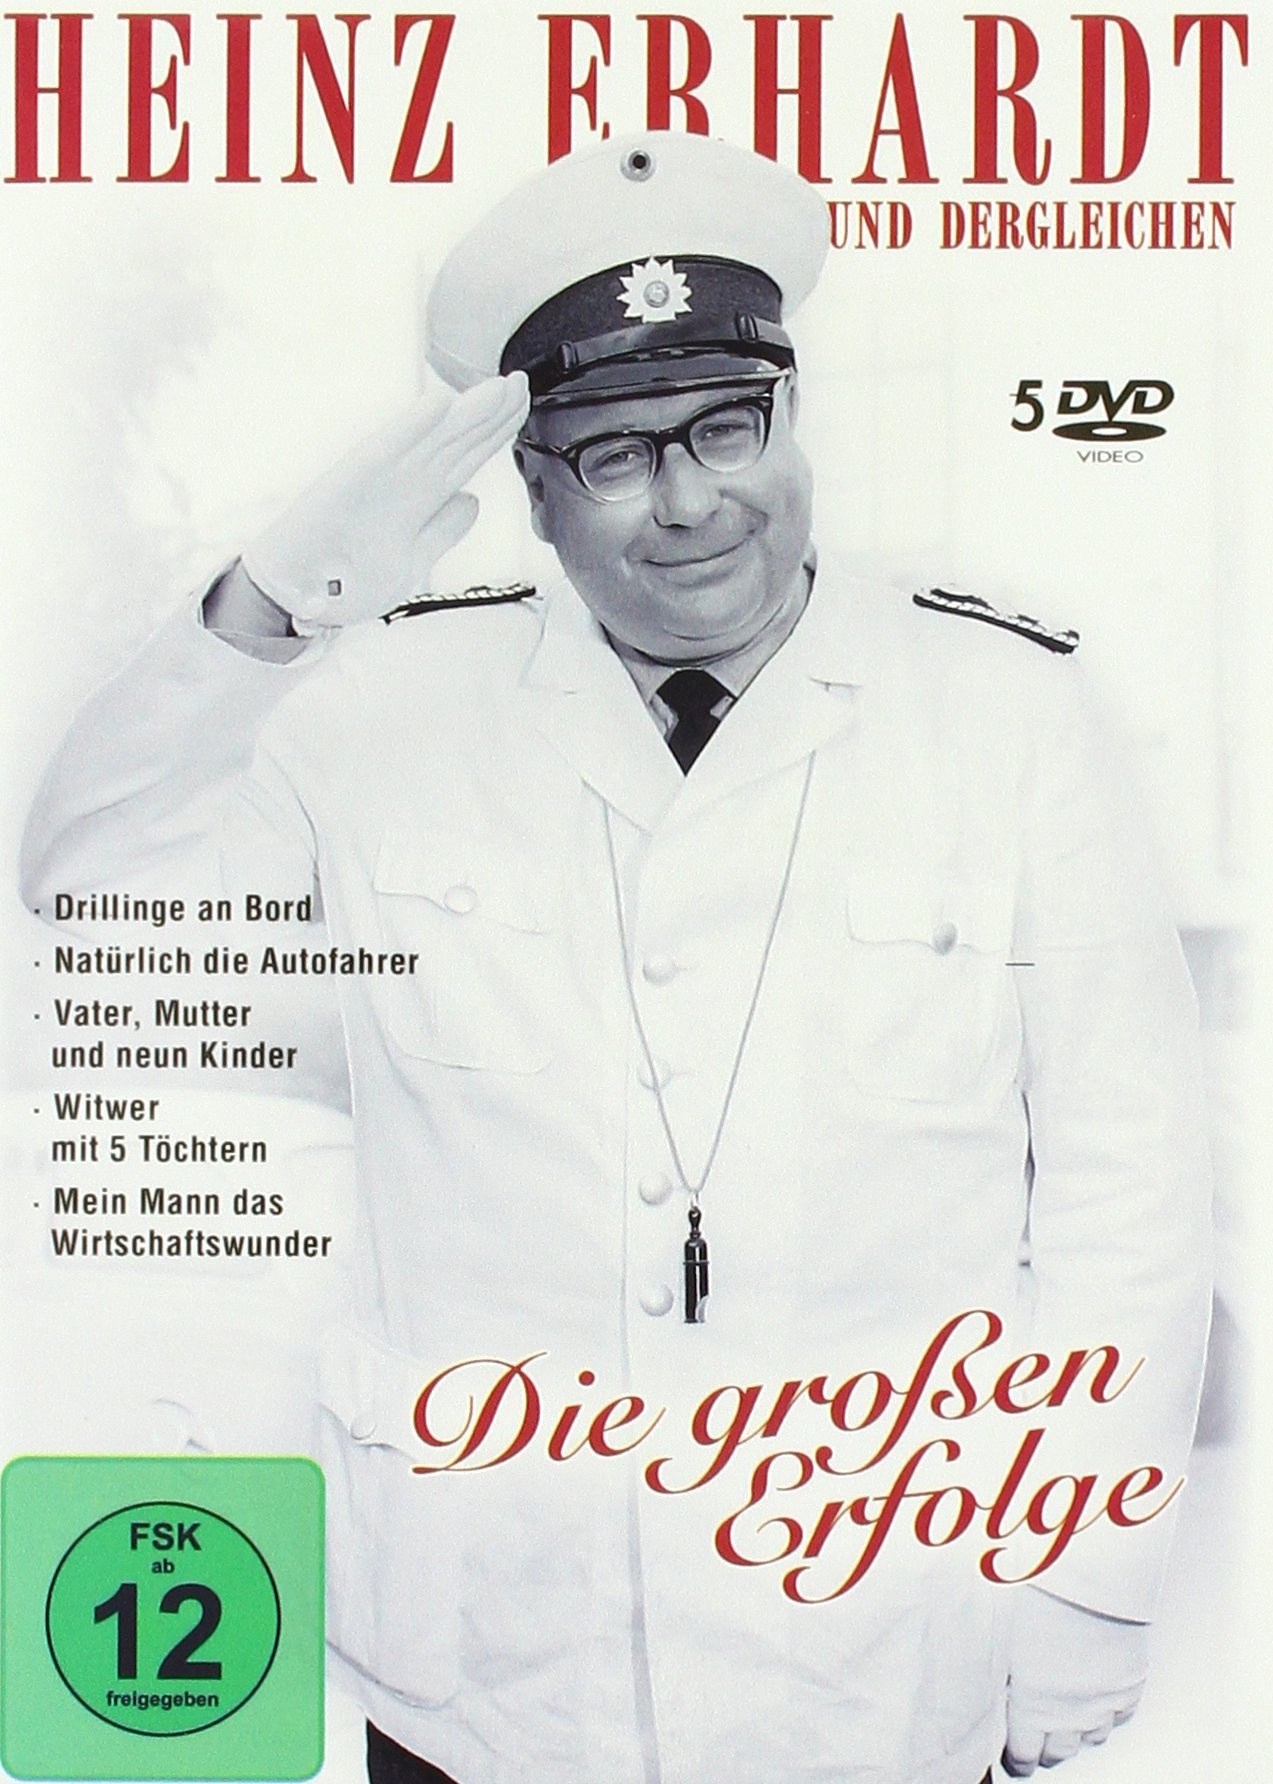 Heinz Erhardt - Die großen Erfolge (5er-Schuber) [5 DVDs] (Neu differenzbesteuert)